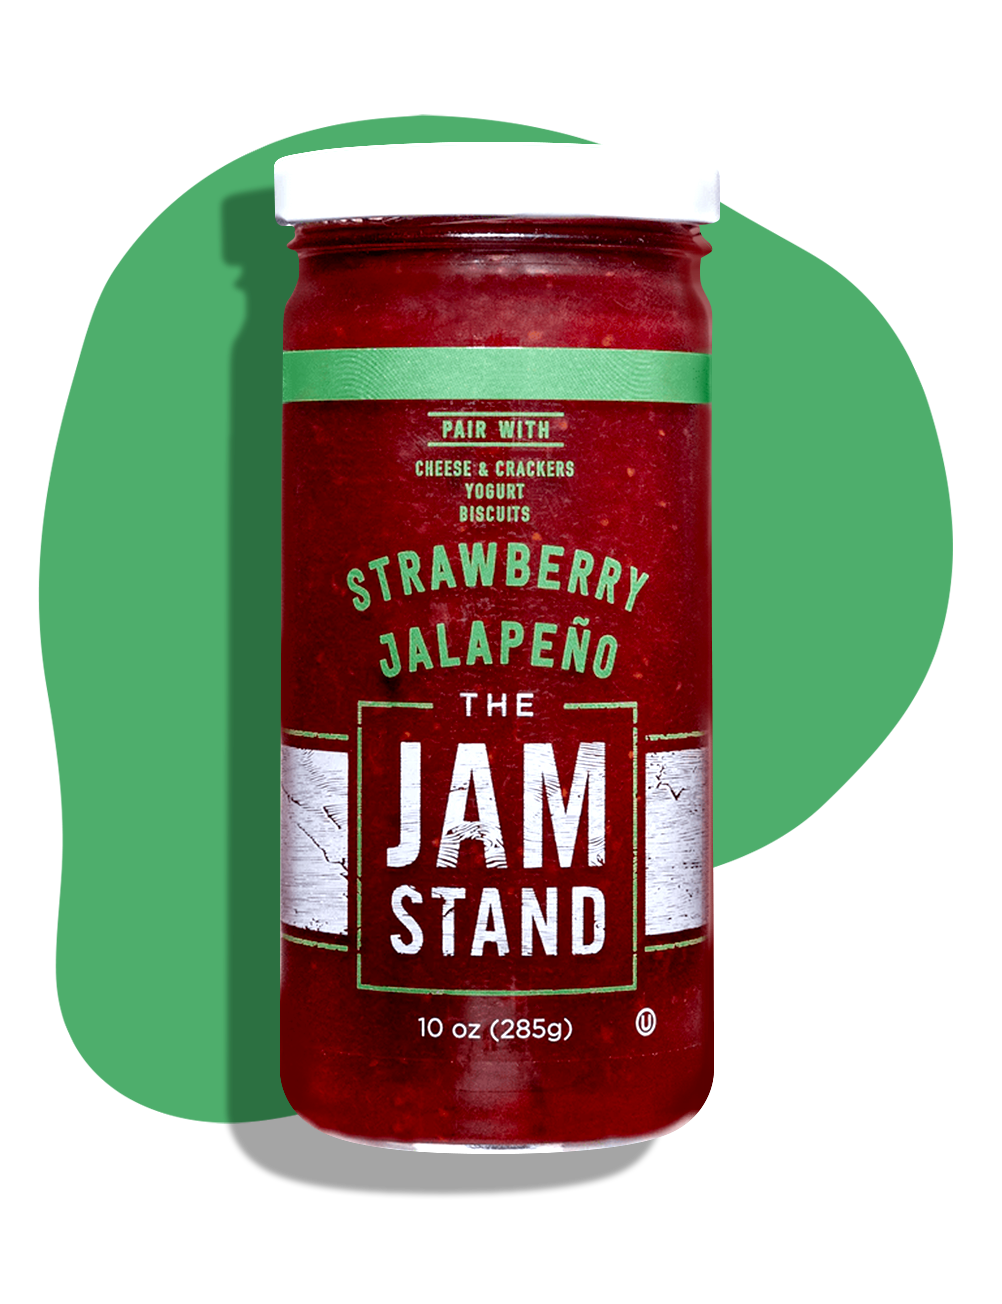 The Jam Stand: Strawberry Jalapeno Jam